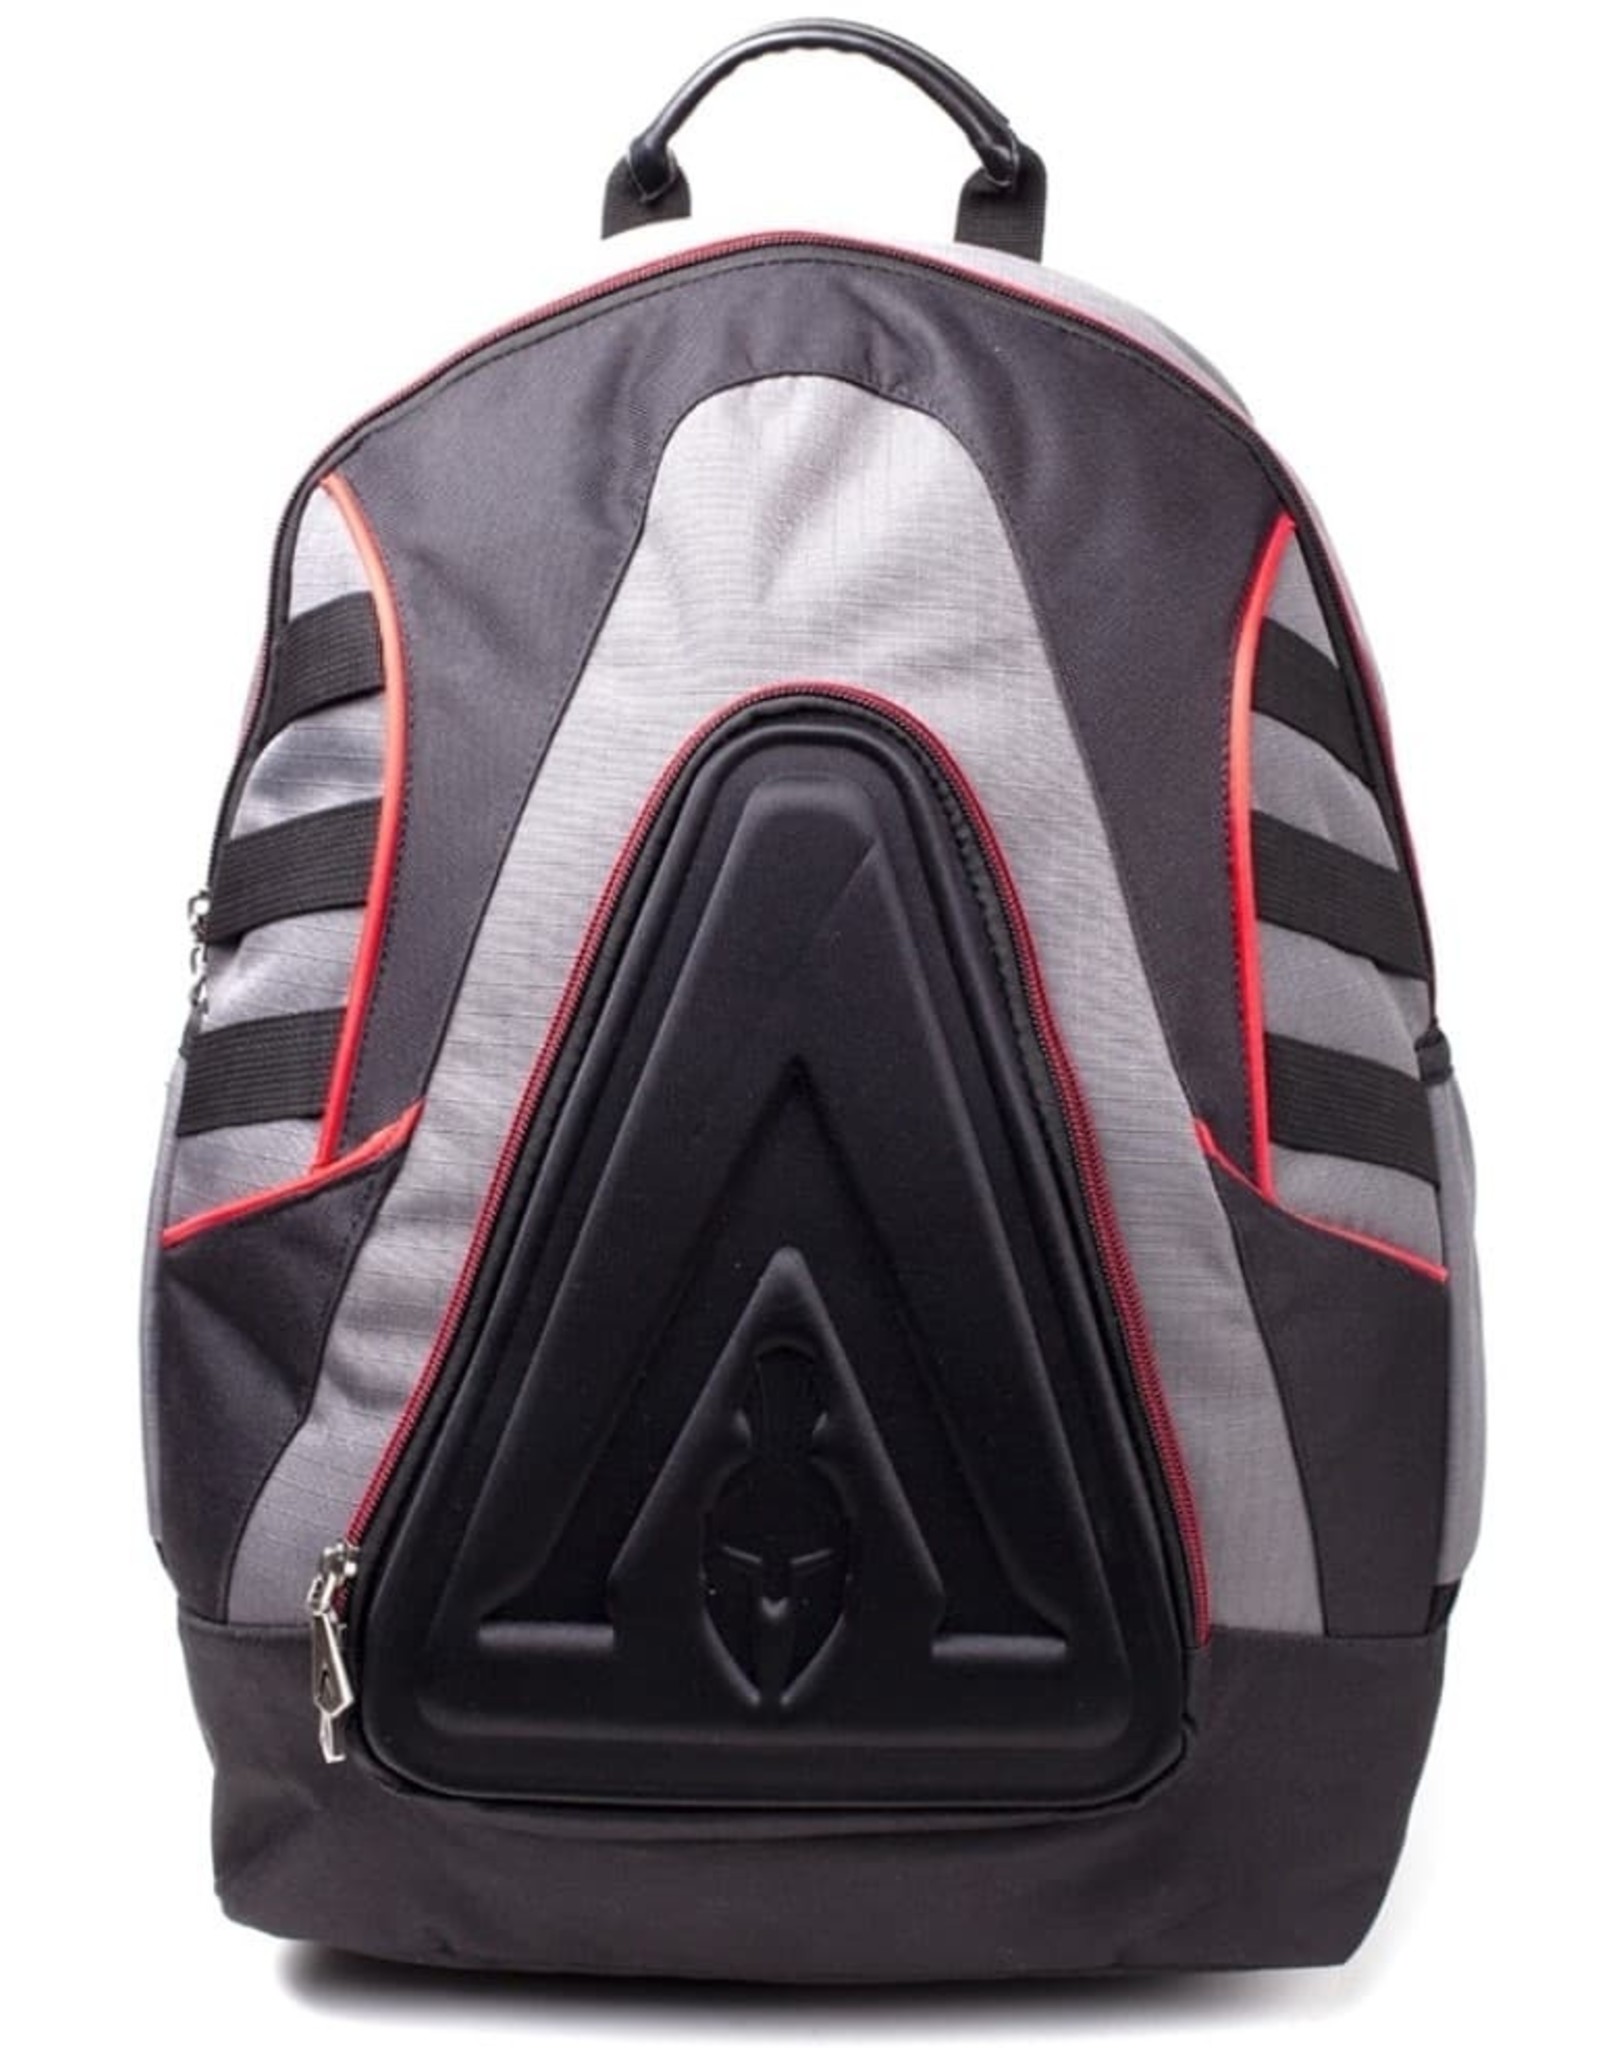 Merchandise backpacks - Creed tech backpack Bags Boutique Trukado